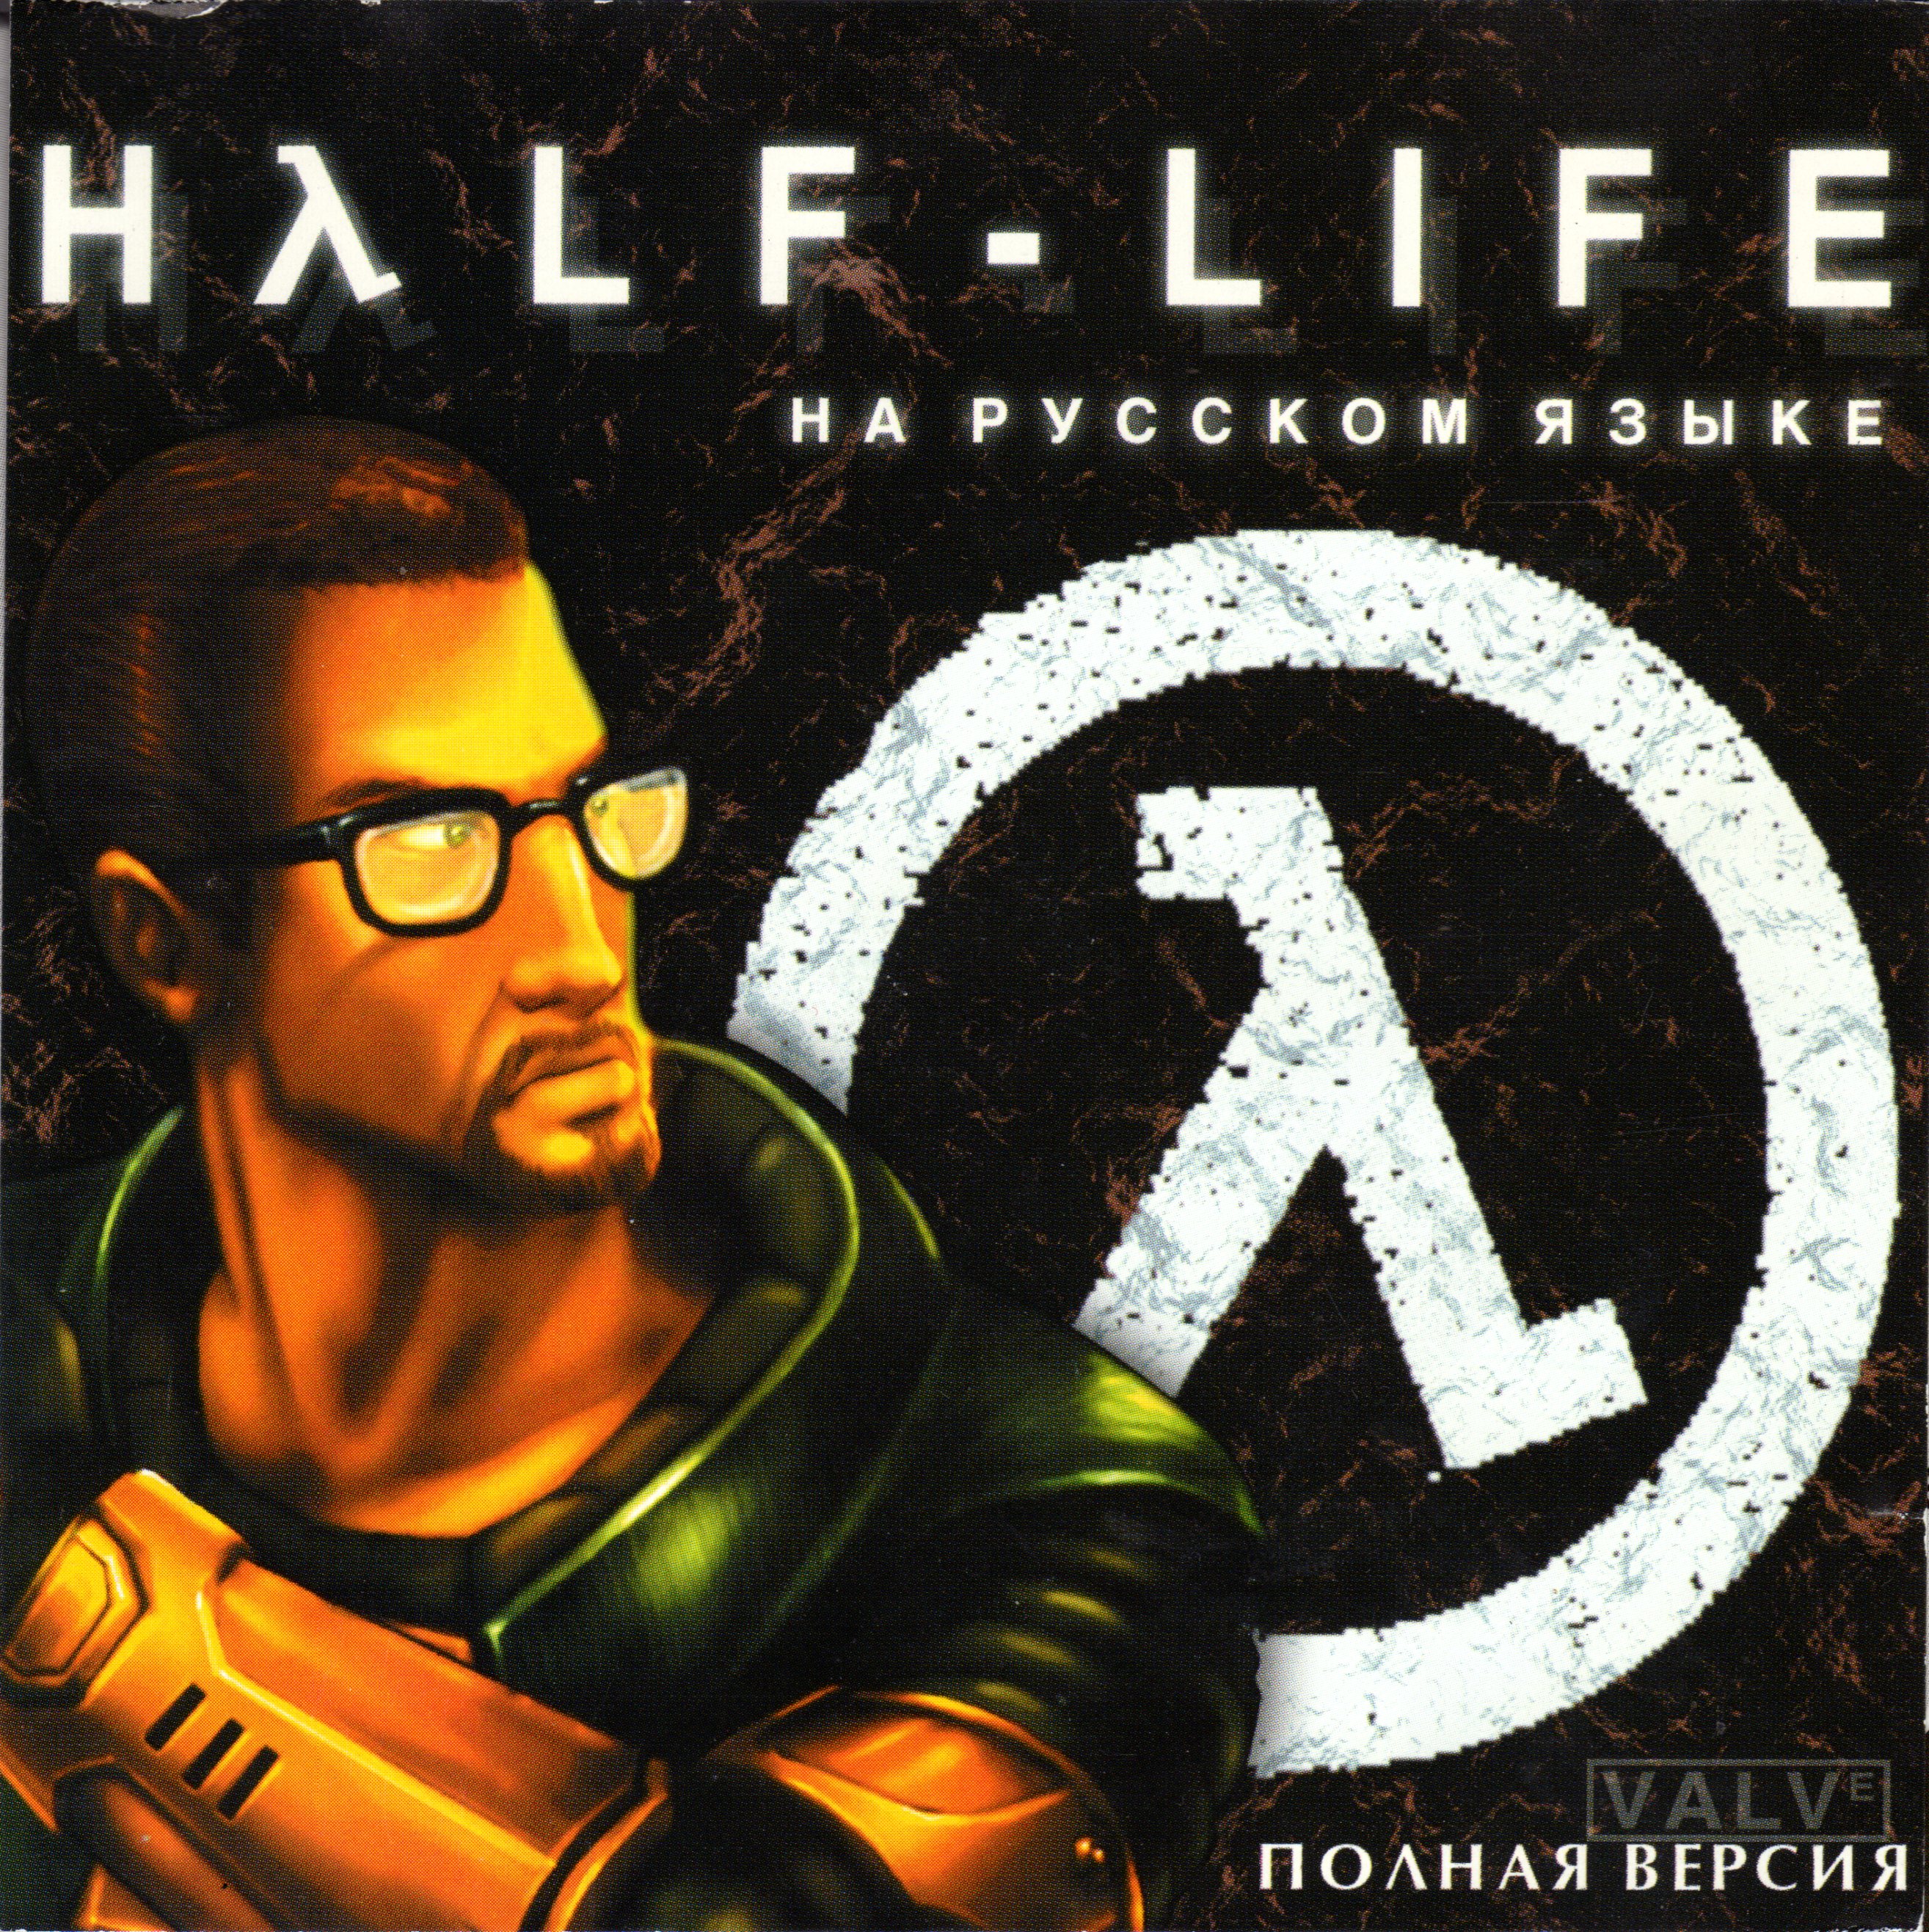 Half life dreamcast. Half Life 1998 обложка. Half Life обложка игры. Half Life 1 обложка. Half Life 1 обложка 1998 диск.